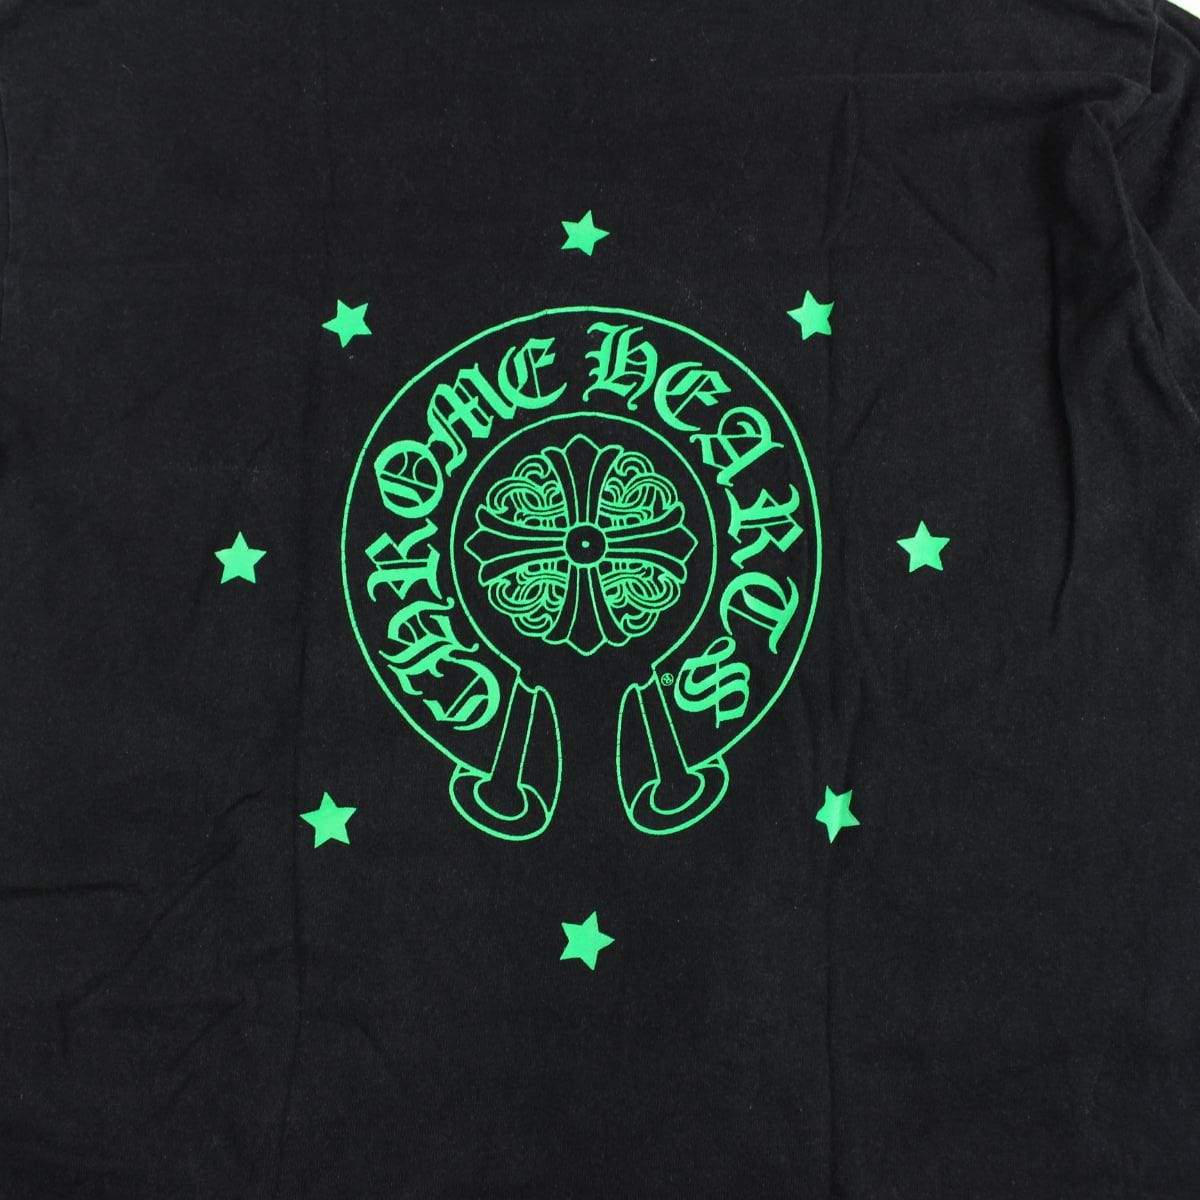 chrome hearts green Cross stars logo ls black 90's - SaruGeneral